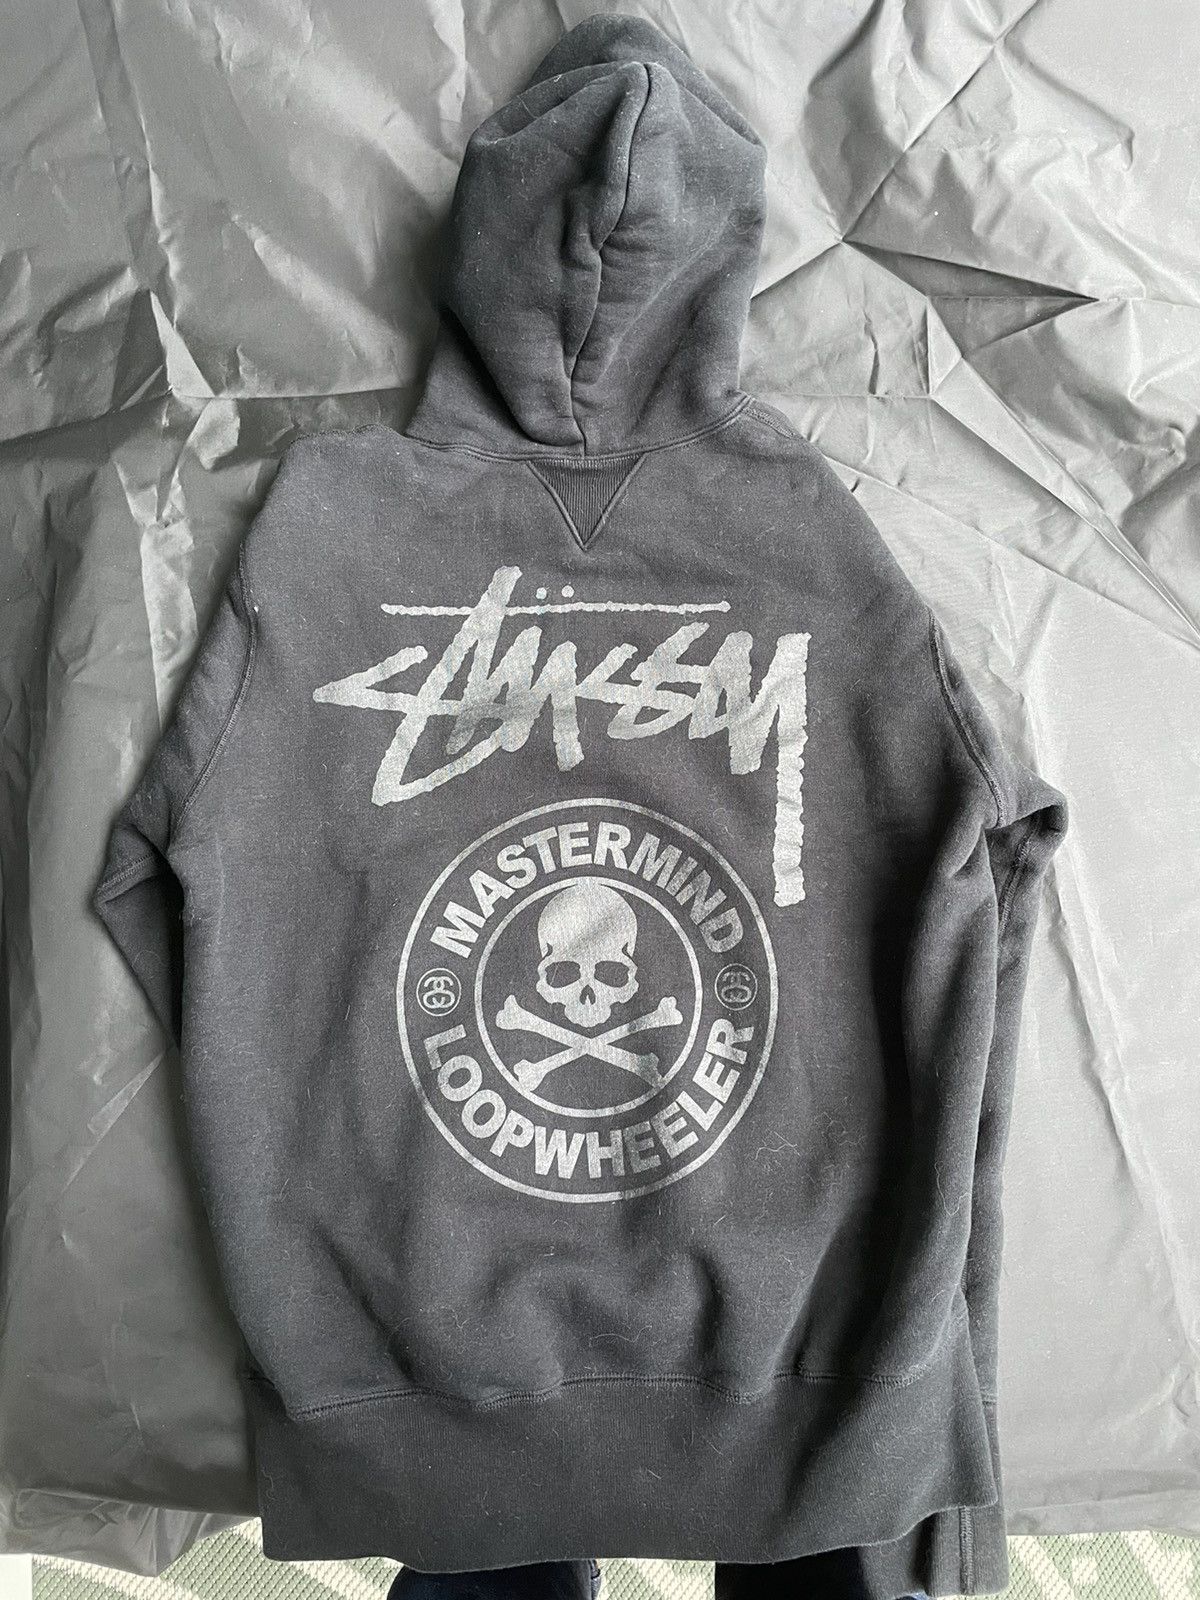 Stussy Stussy x Mastermind x Loopwheeler hoodie Size M | Grailed